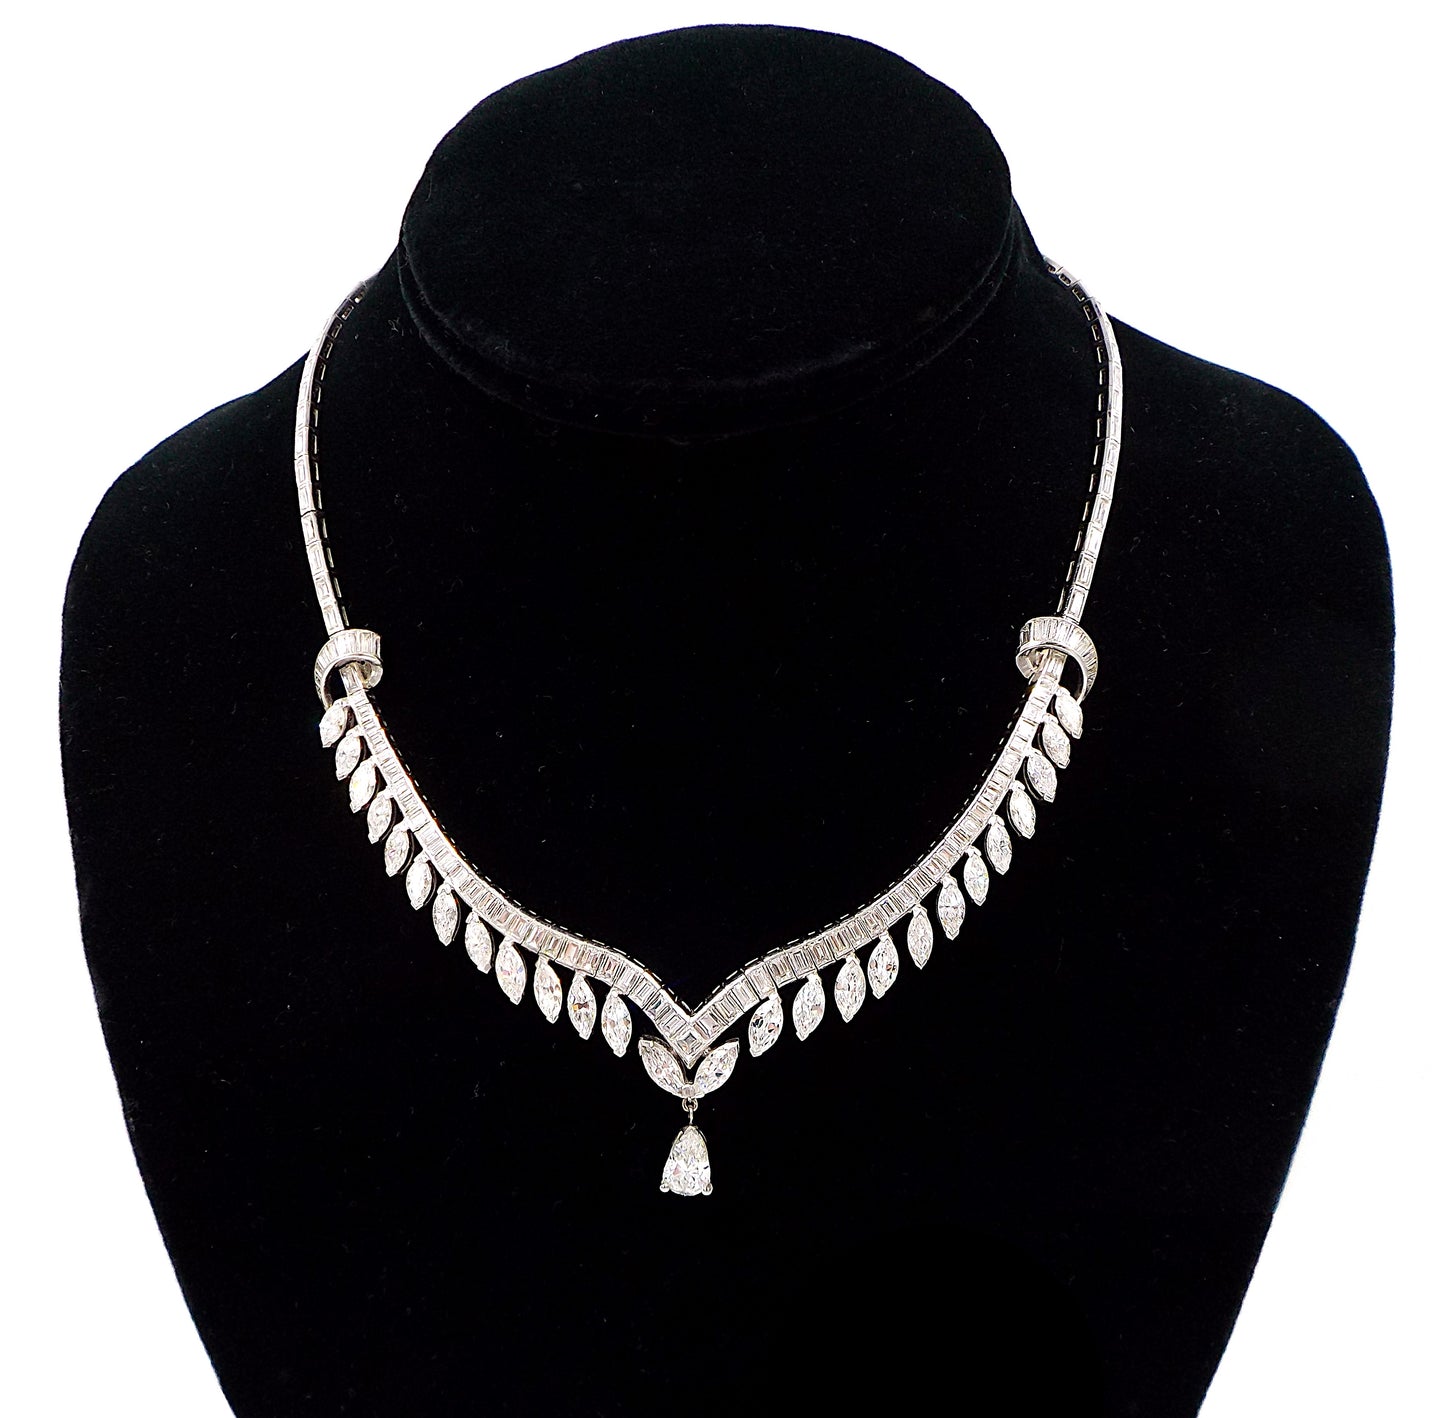 Platinum Diamond Necklace w/a GIA Certified Pear-Shape